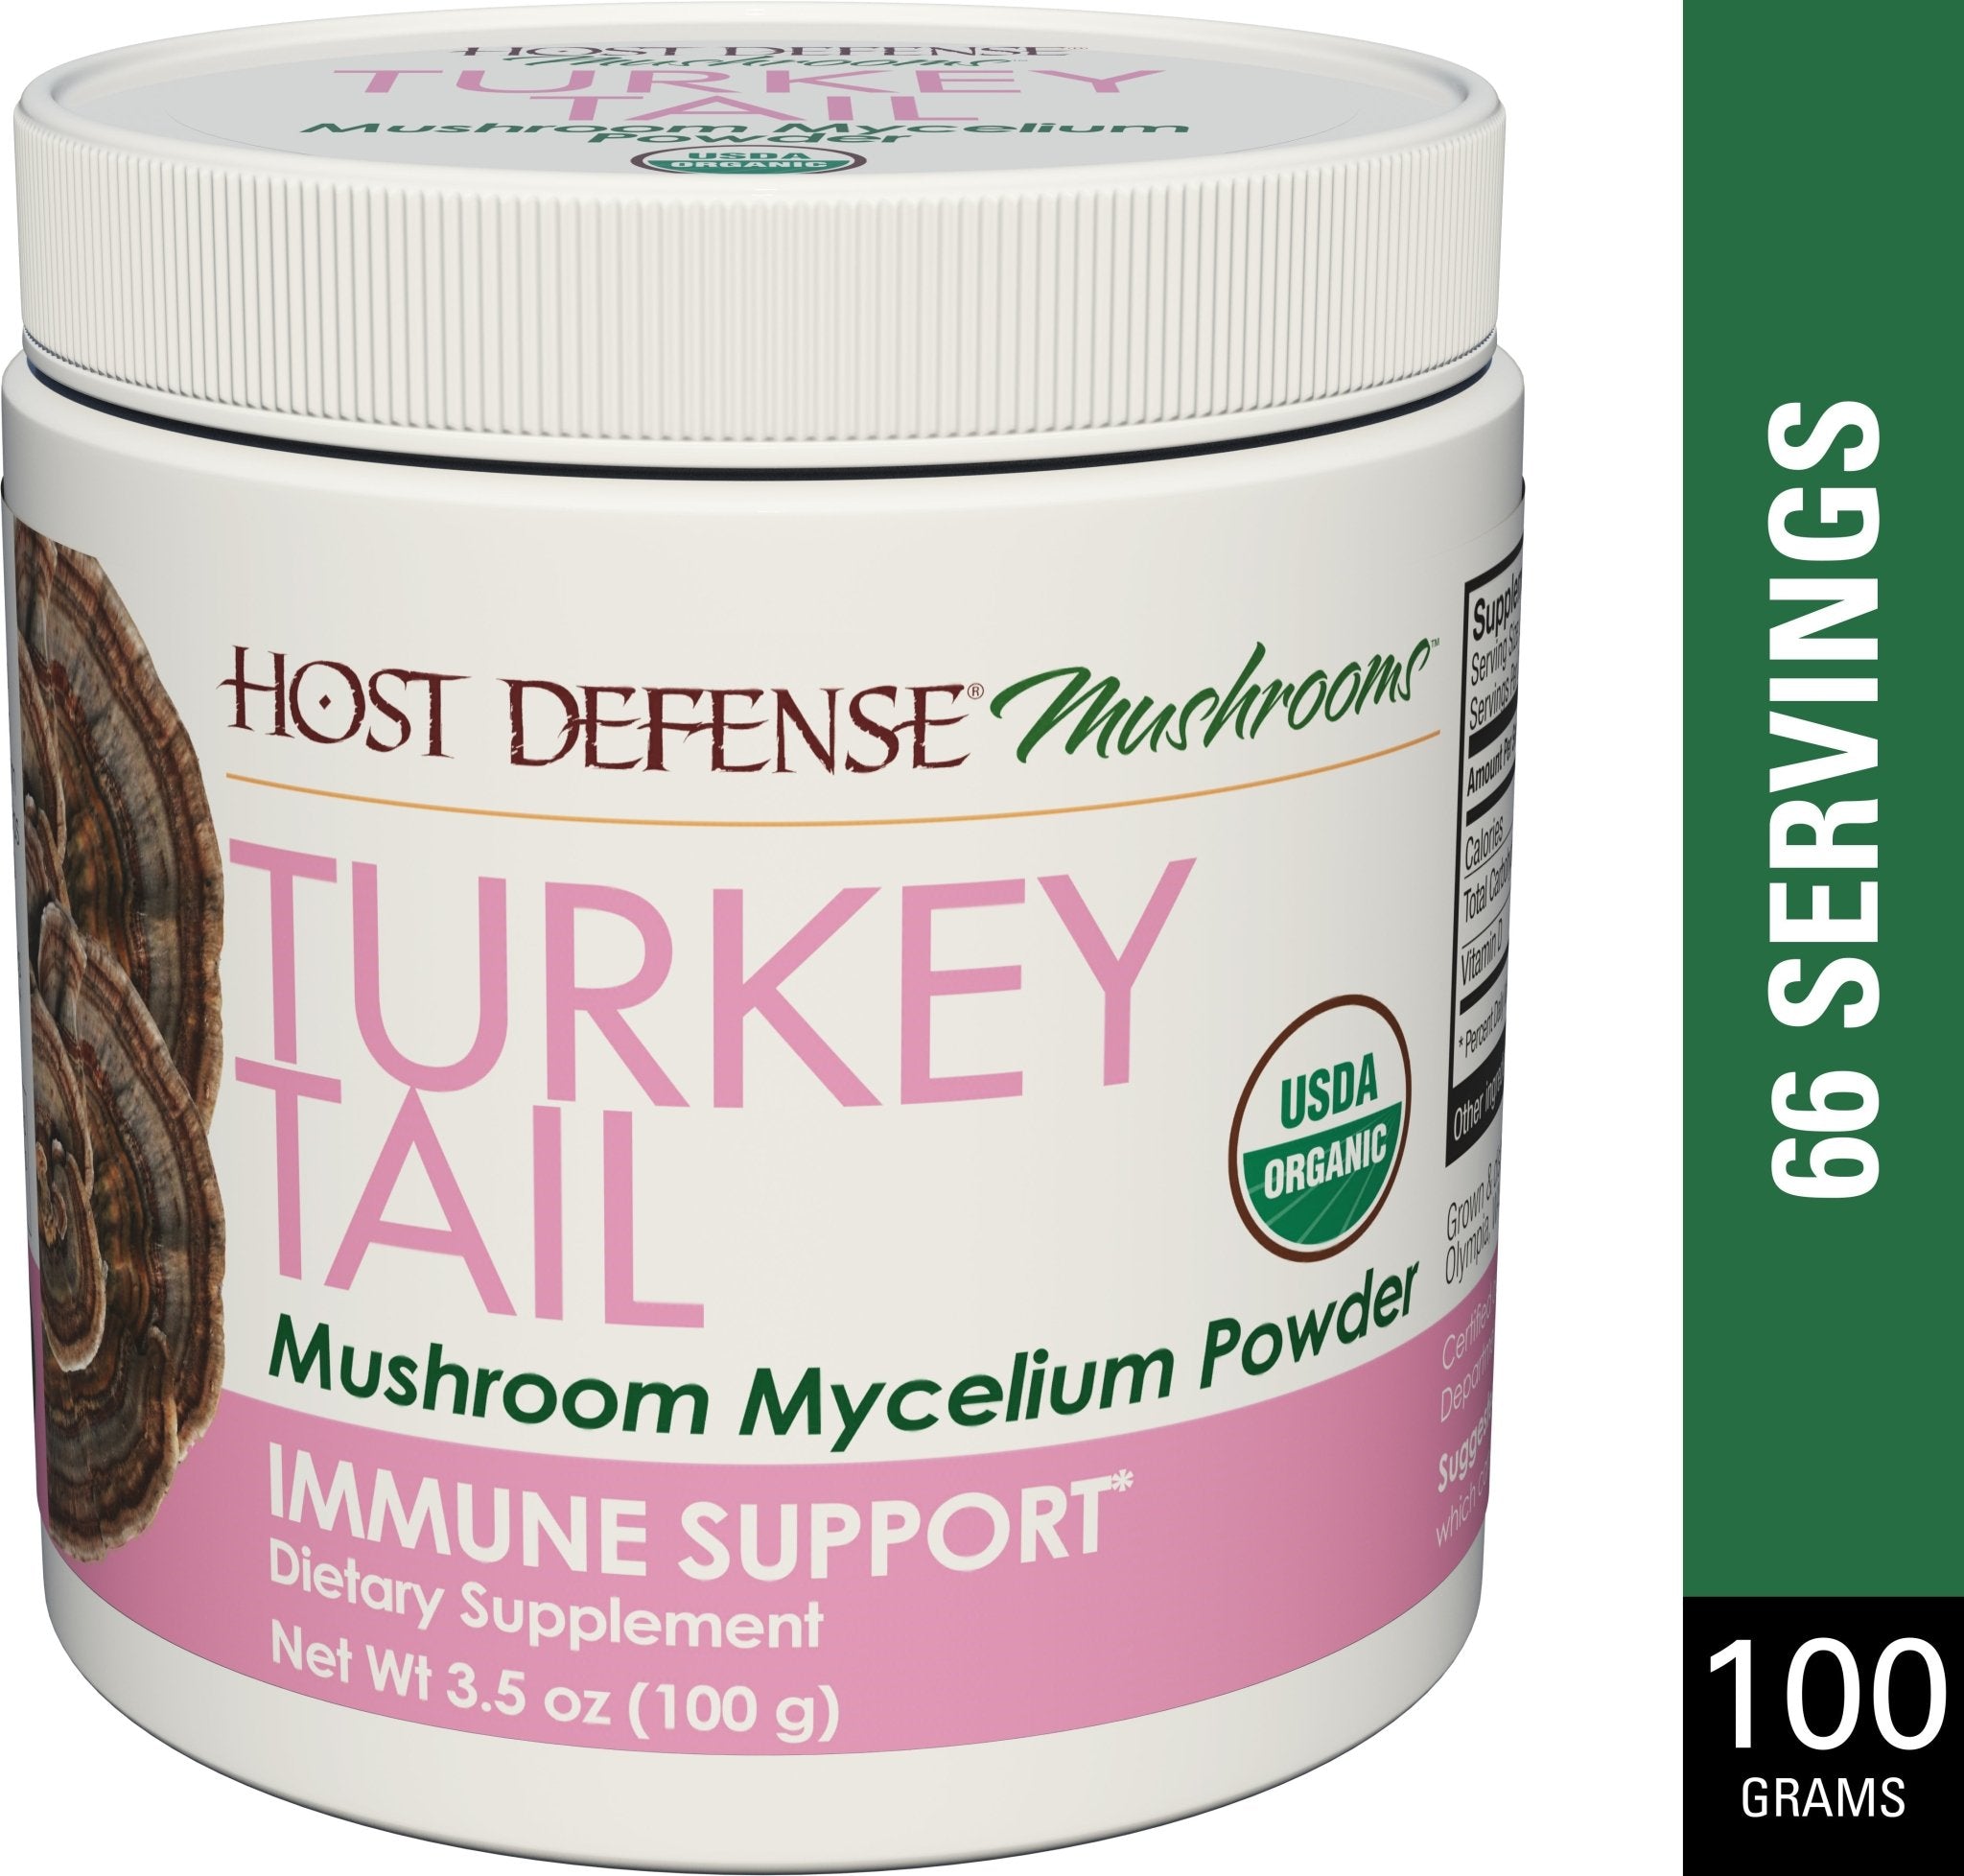 Turkey Tail Powder - Trichome Seattle - Host Defense - Fungi